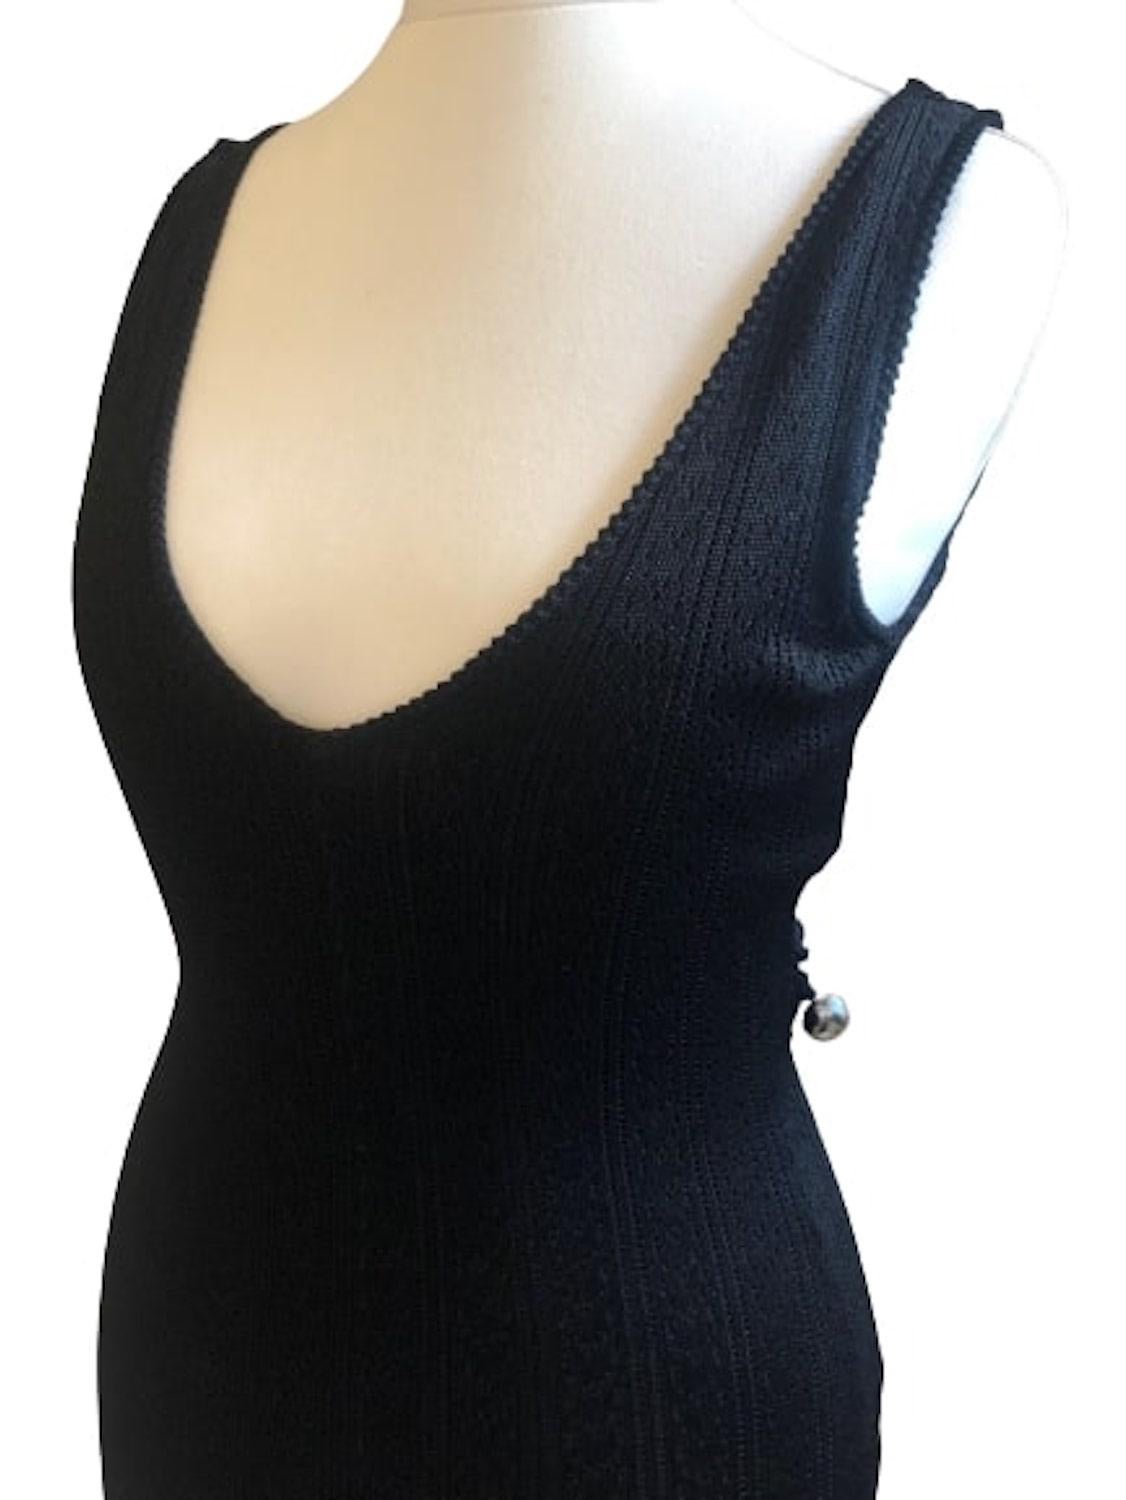 JOHN GALLIANO - Robe de soirée en dentelle noire tricotée, longueur moyenne, circa 1998 en vente 2